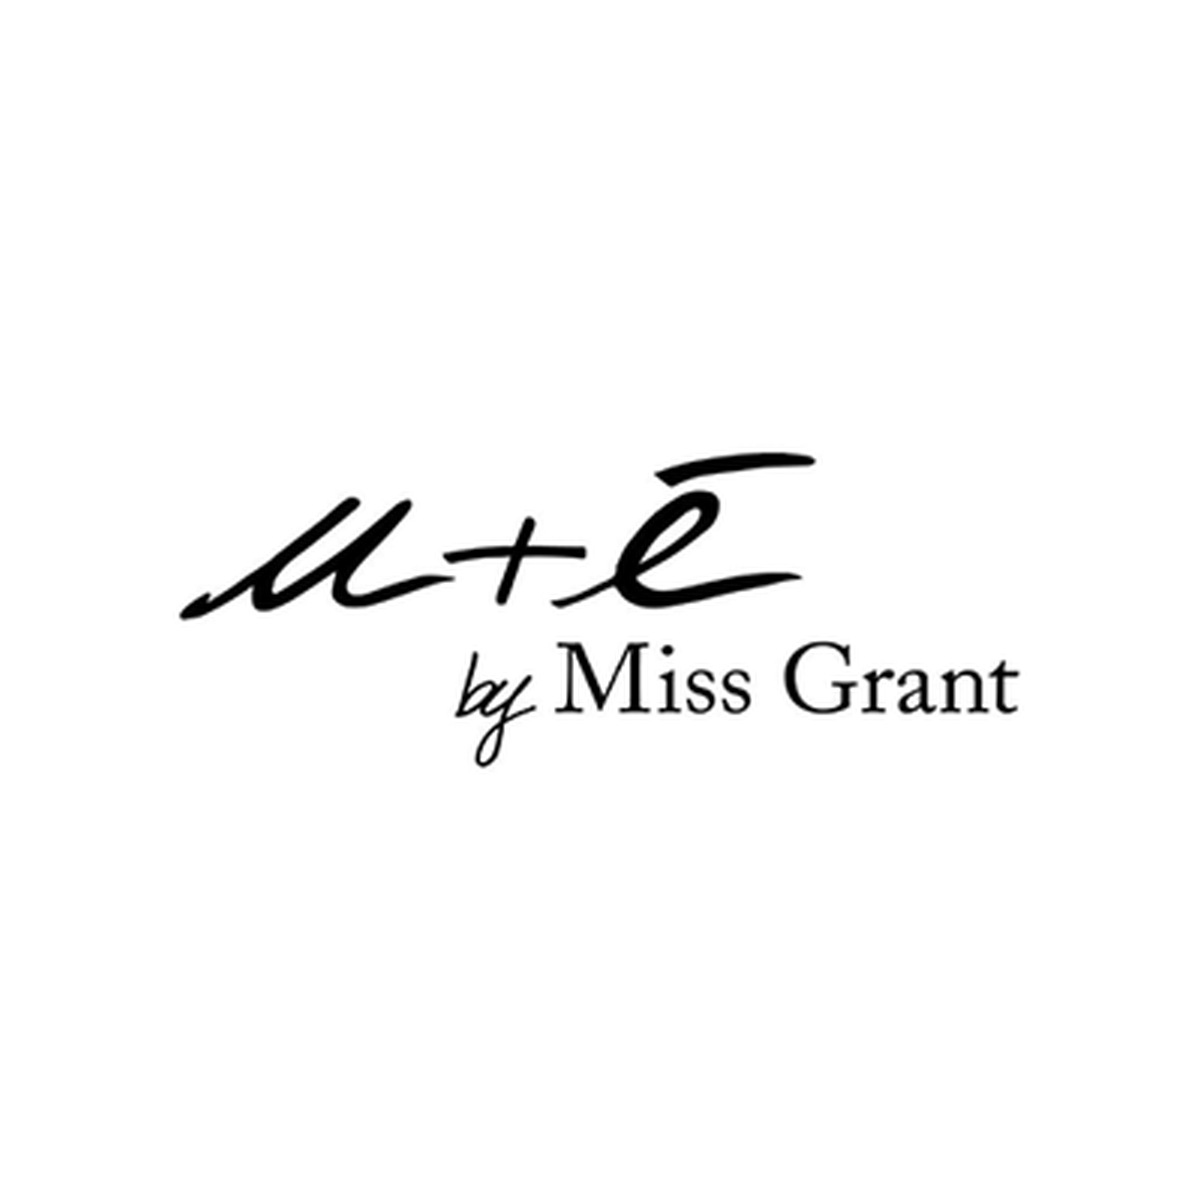 MISS GRANT by U&E